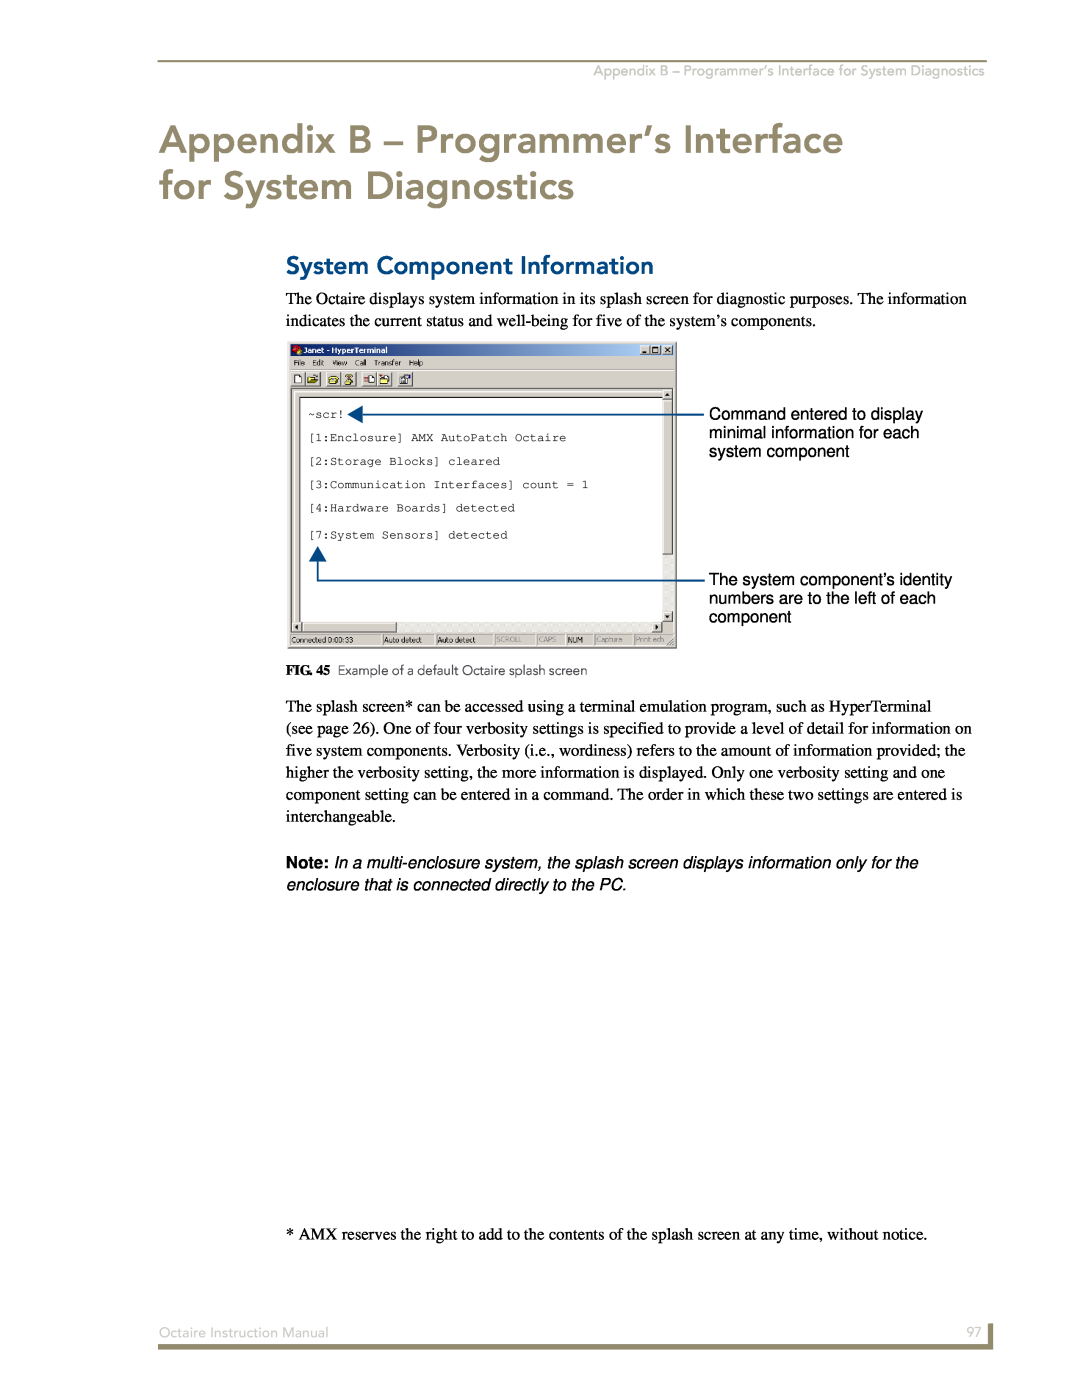 AMX Octaire instruction manual Appendix B - Programmer’s Interface for System Diagnostics, System Component Information 